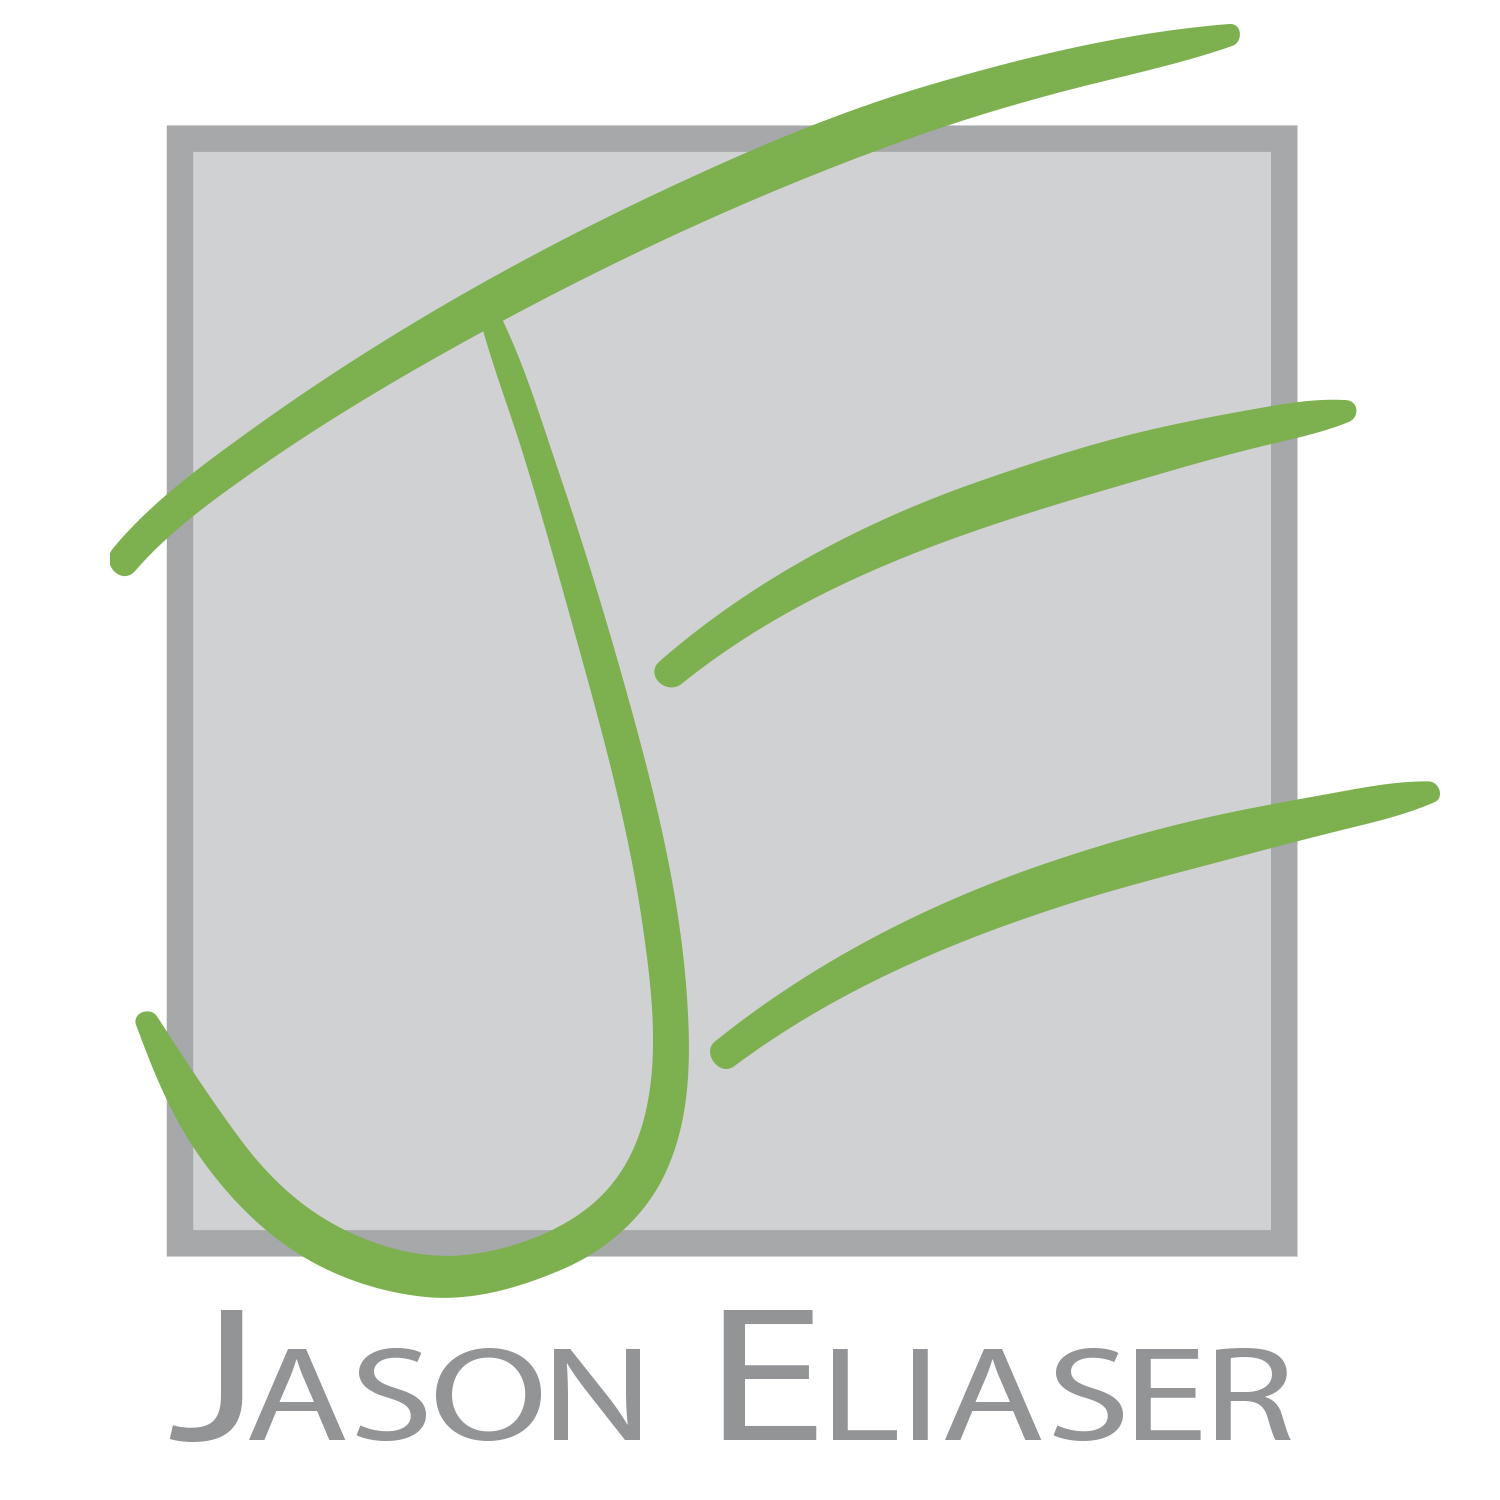 Jason Eliaser